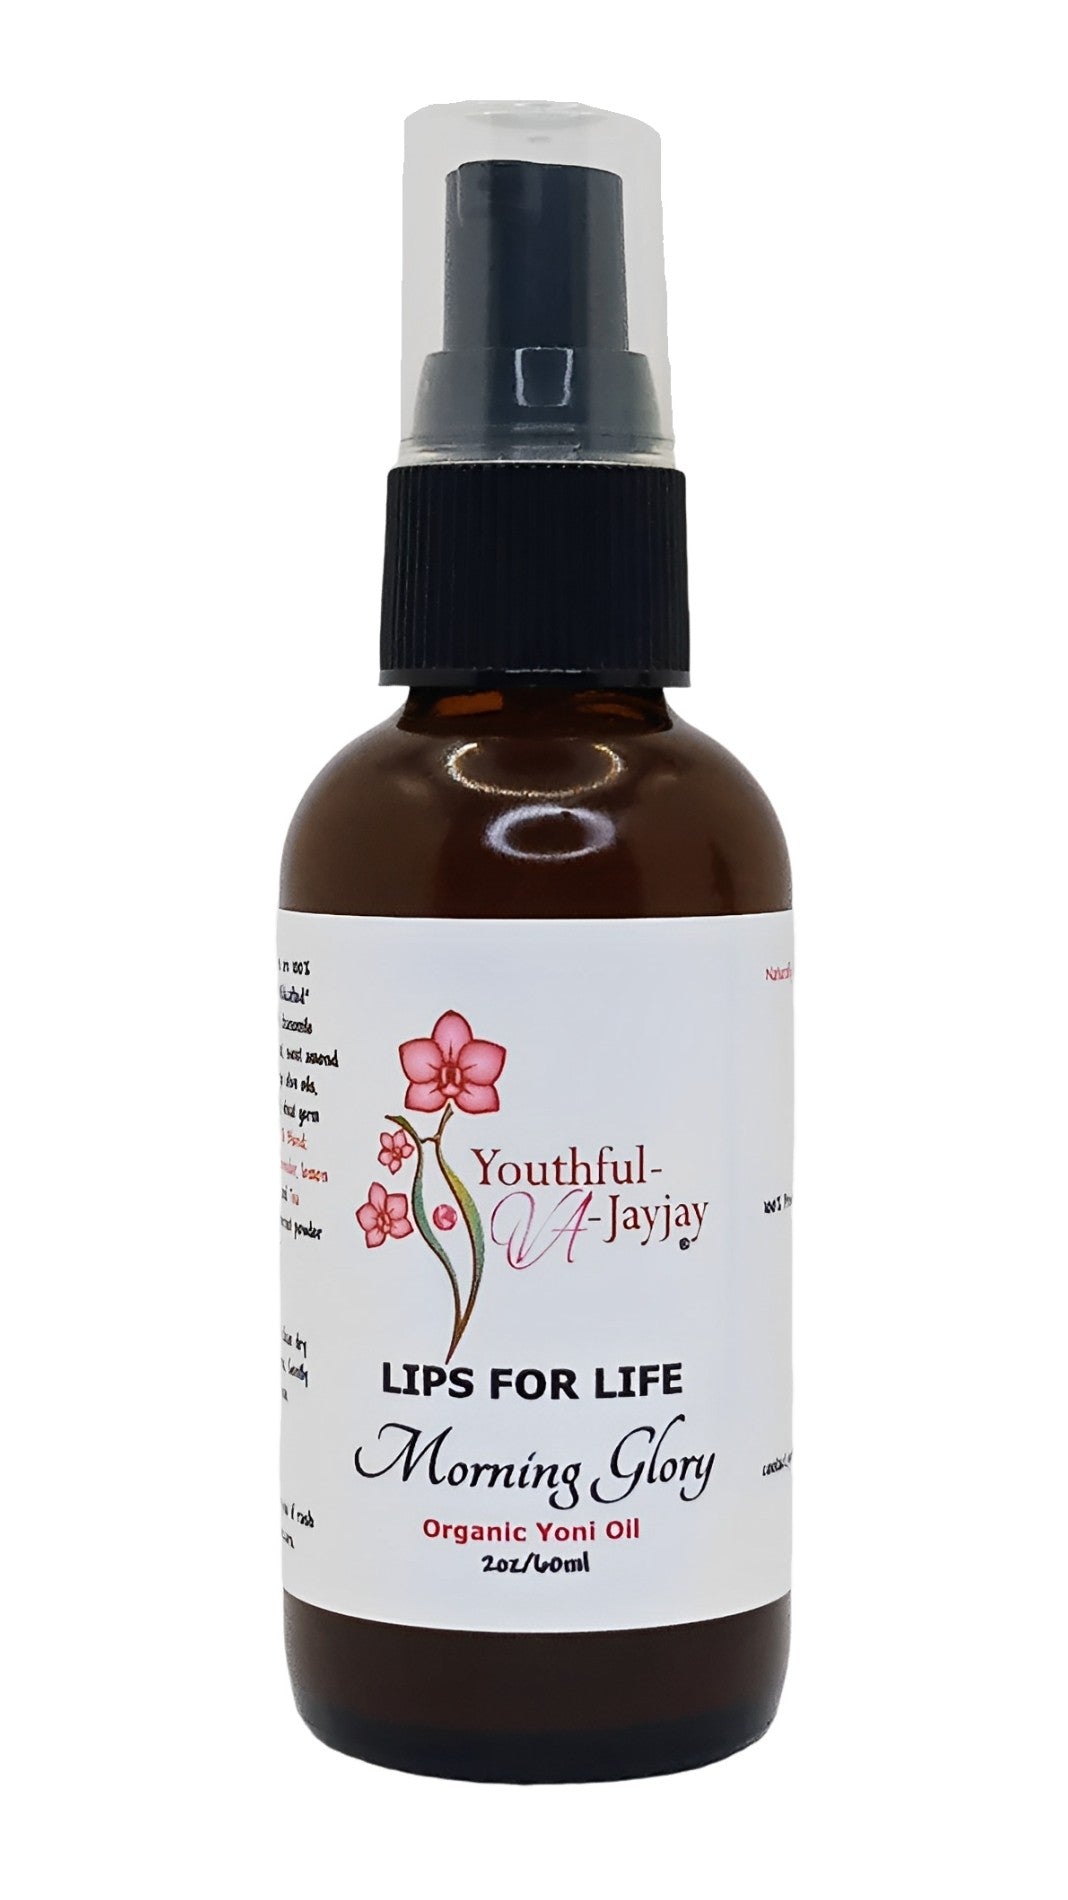 LIPS FOR LIFE: Morning Glory - Yoni Oil, Antibacterial, 10ml Sample